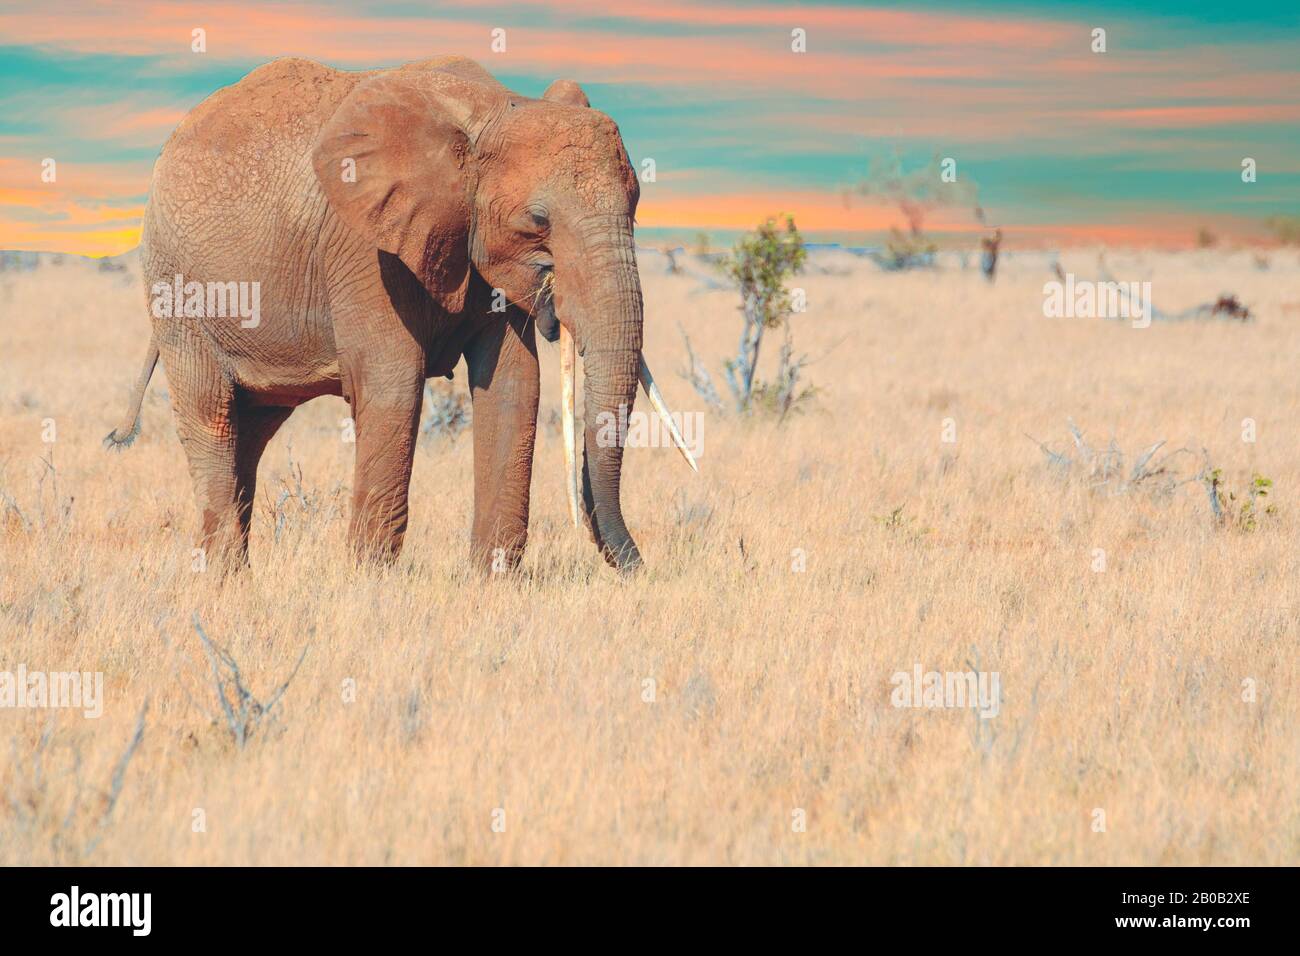 The elephant in the Jungle of Tanzania Stock Photo